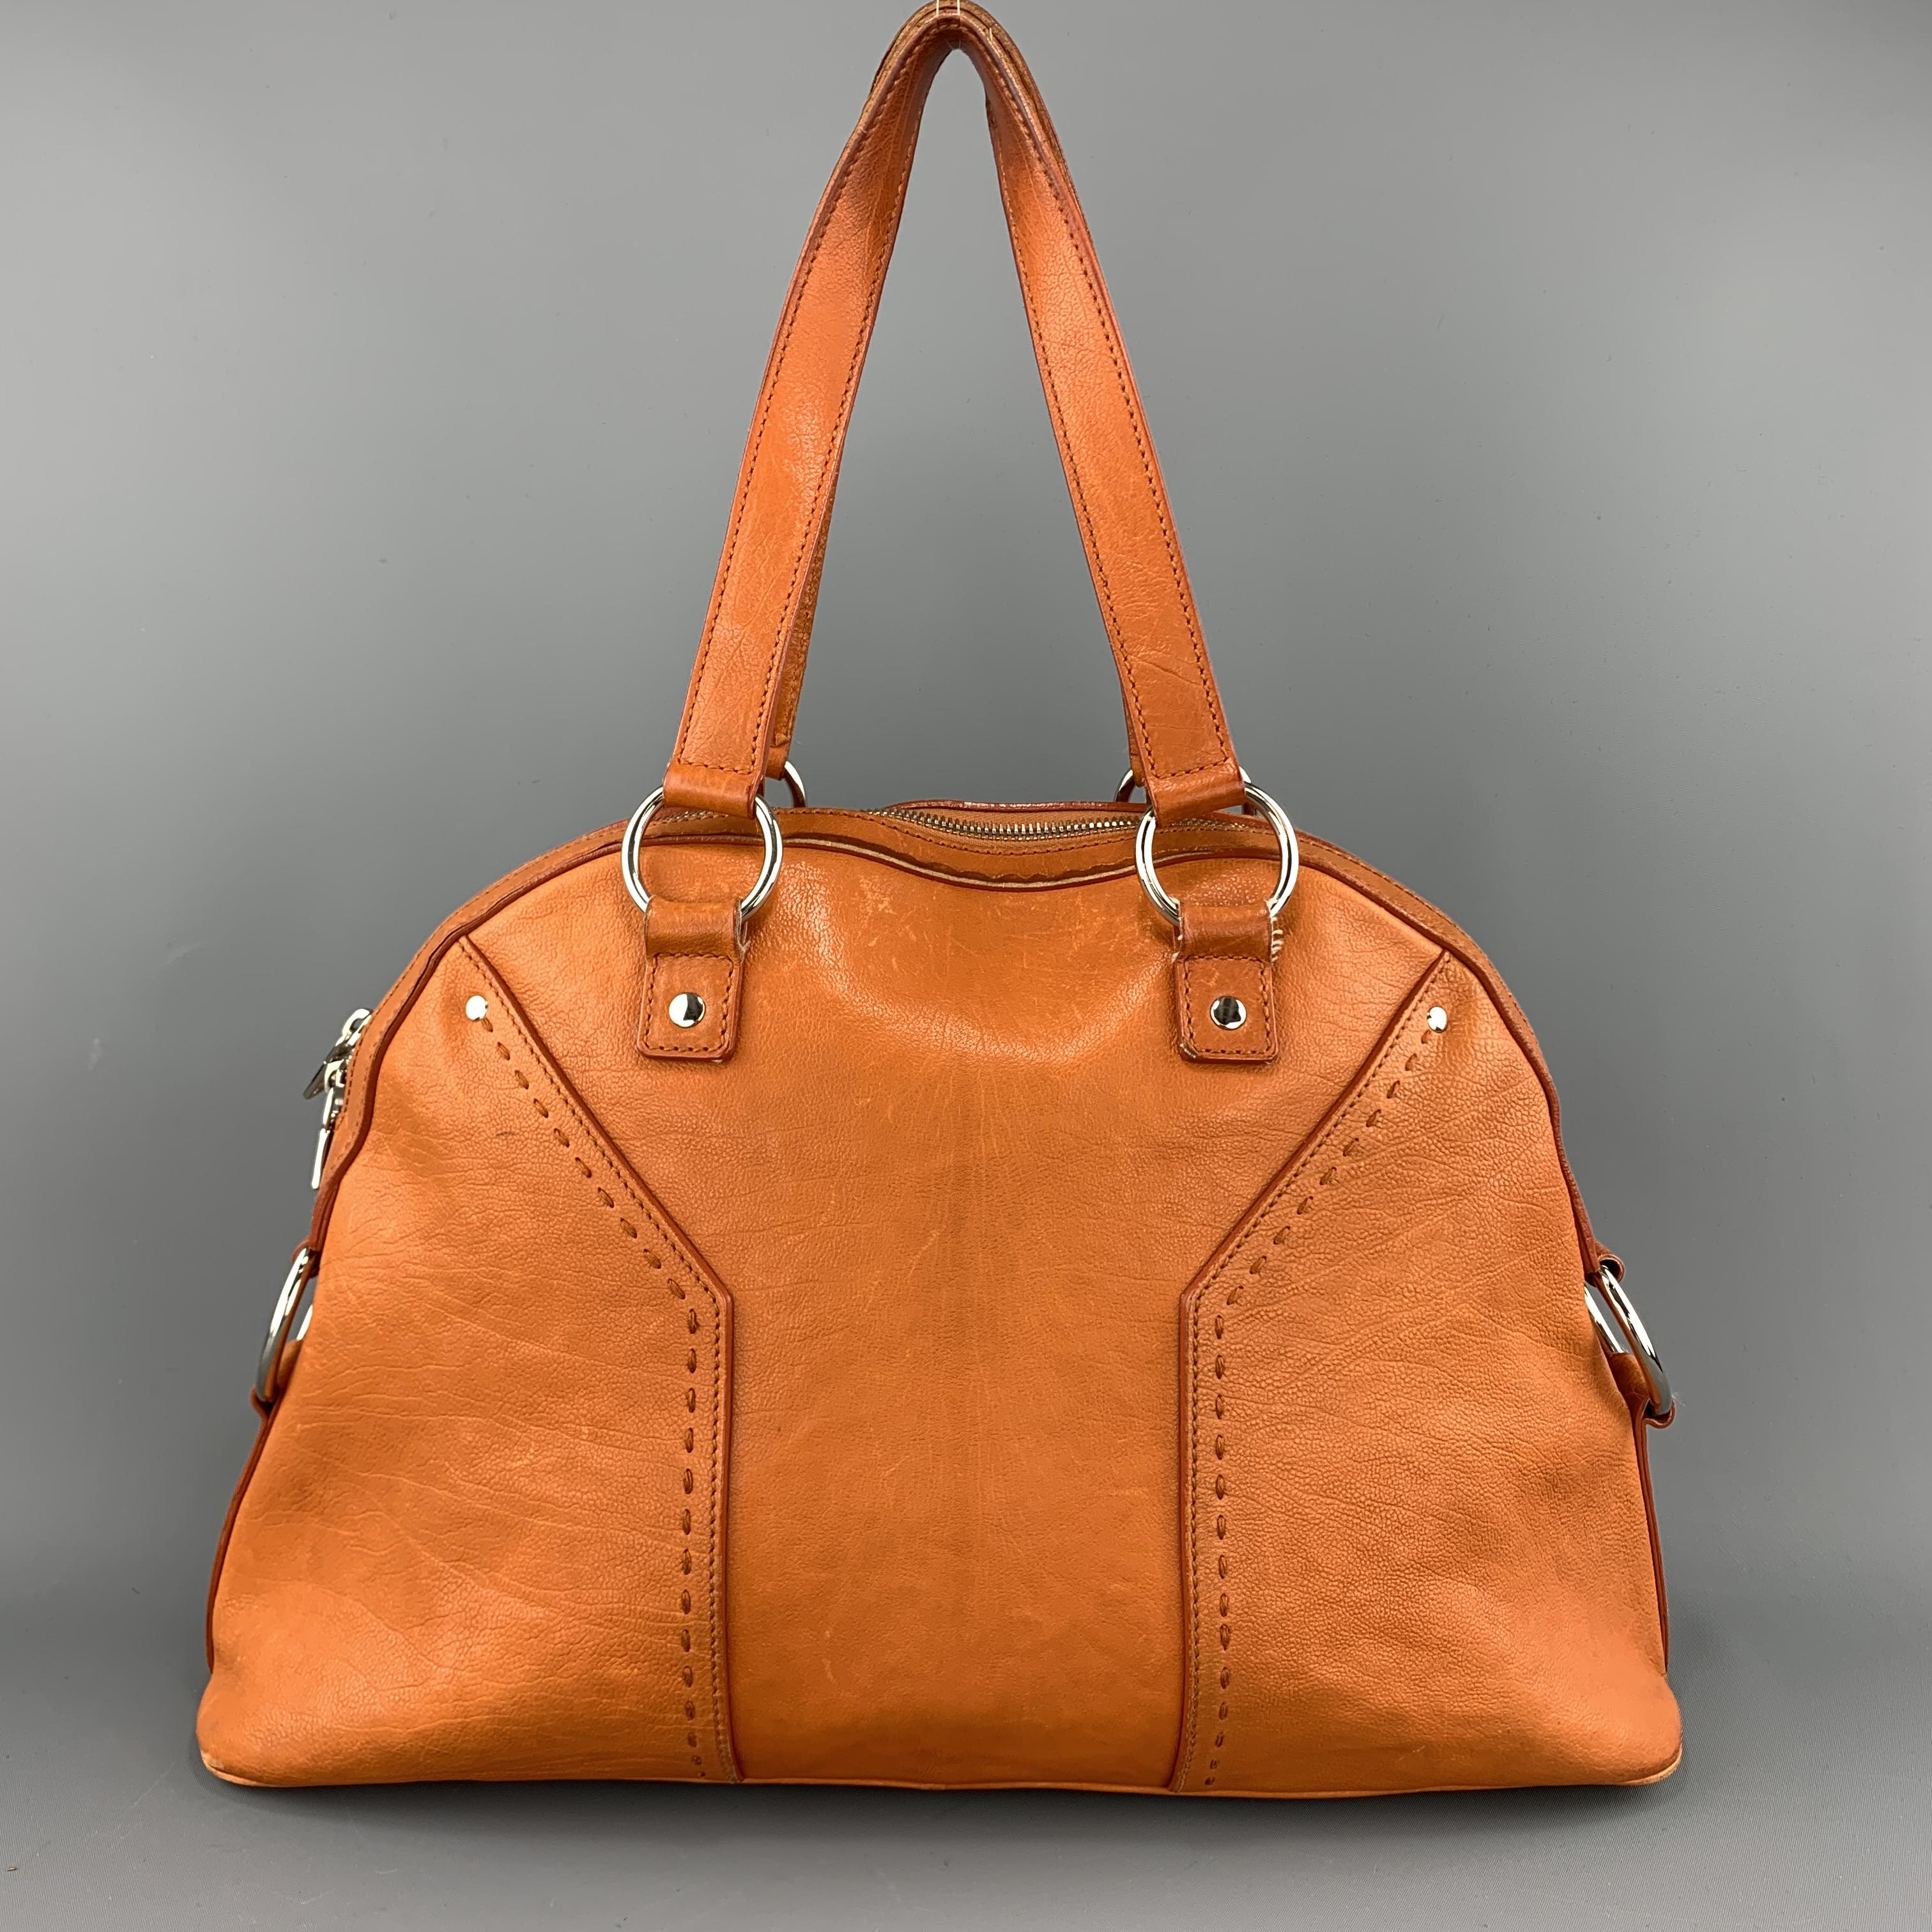 burnt orange leather handbags